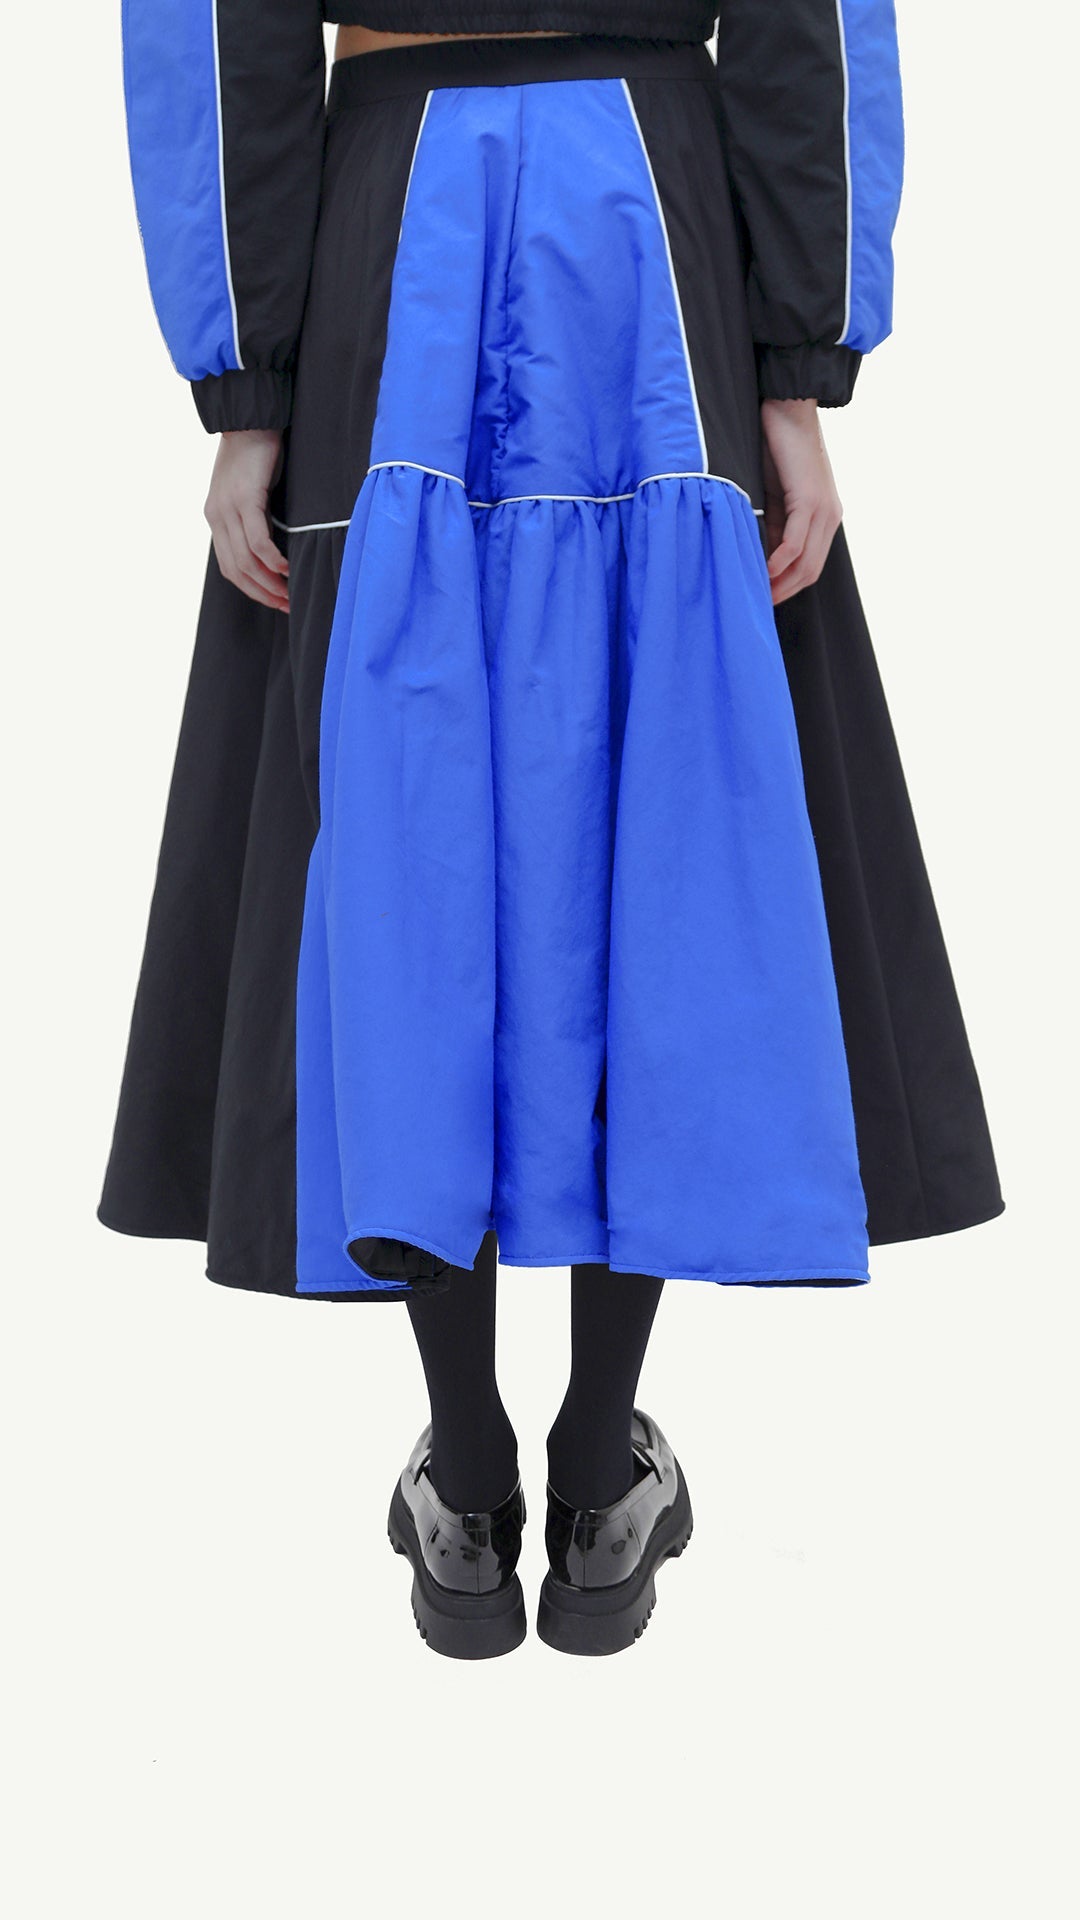 Essex Skirt (Sample Product)